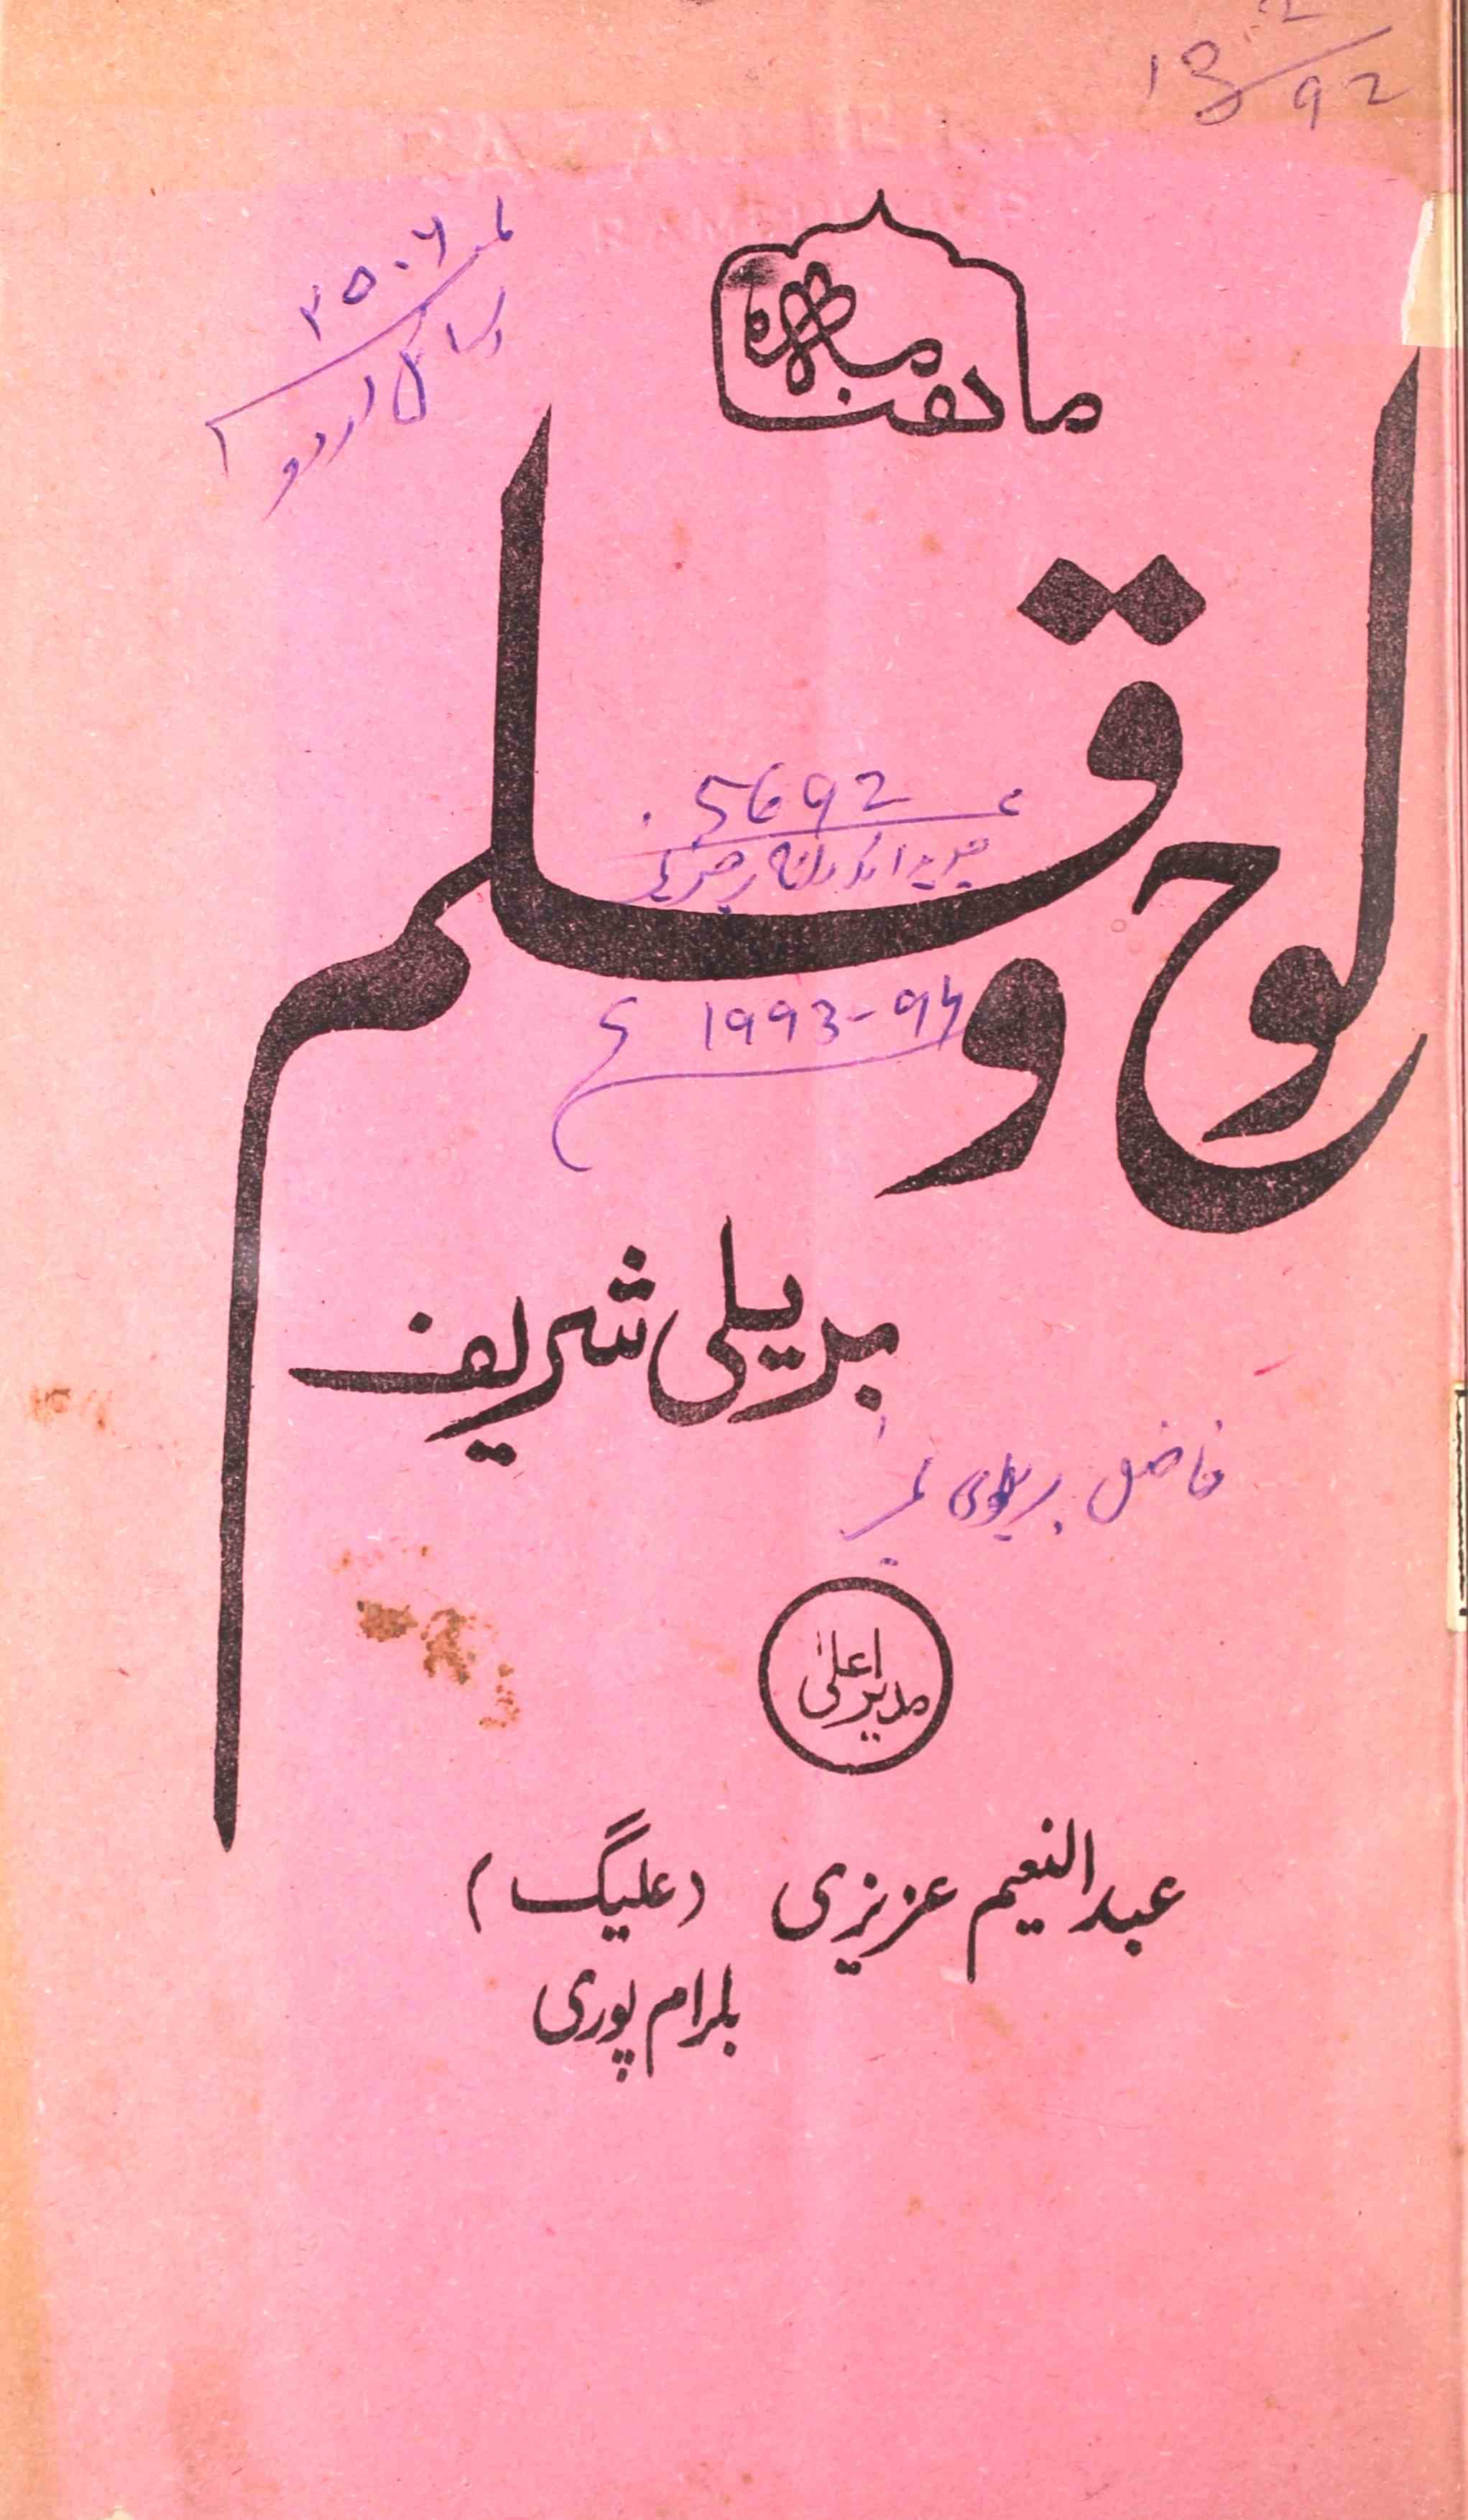 लौह-ओ-क़लम- Magazine by अर-रज़ा इस्लामिक अकादमी, बरेली शरीफ़, दारुत्तबाअत सलामती प्रिन्टिंग प्रेस, गुलबरगा 